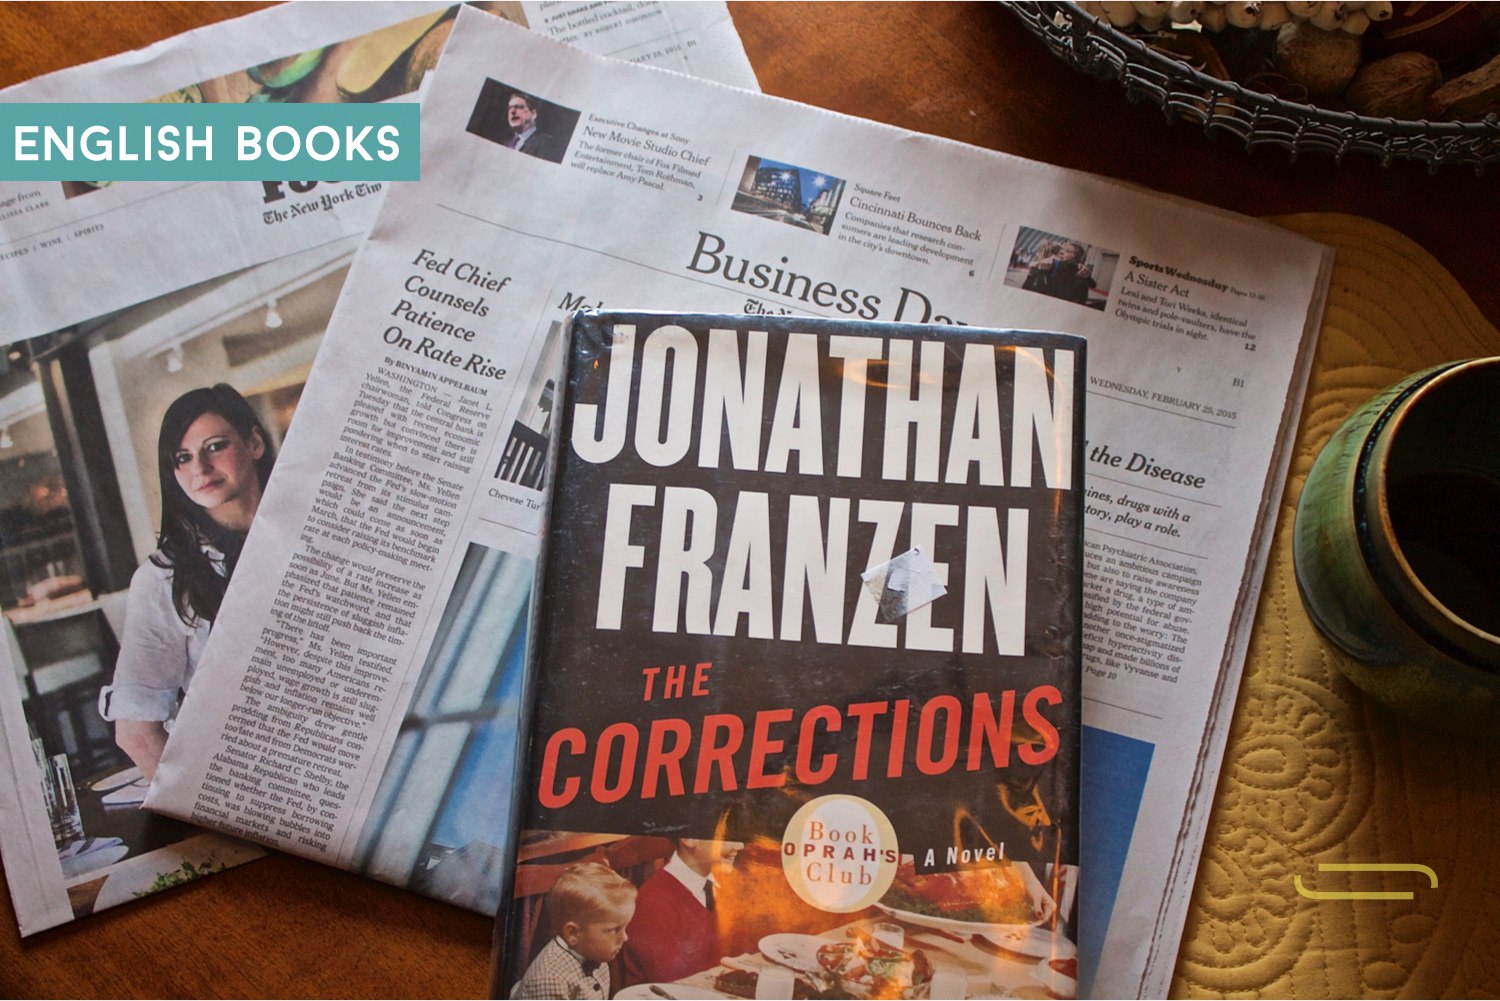 Jonathan Franzen — The Corrections